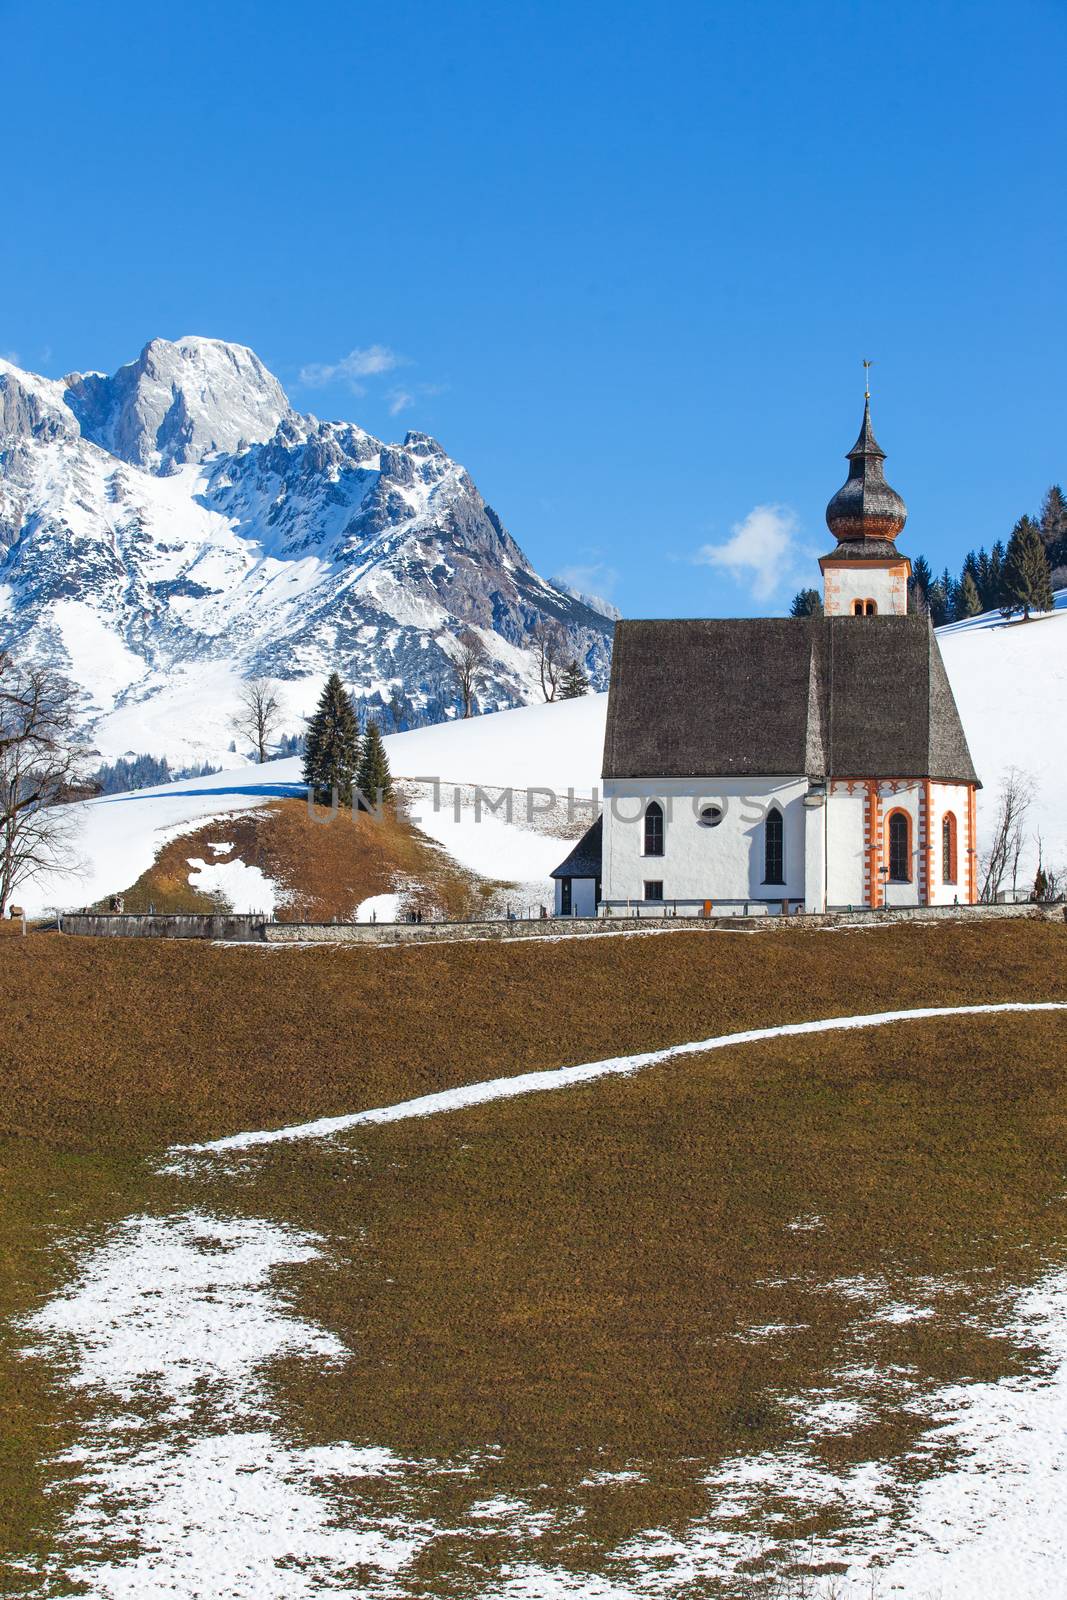 Beautiful winter view of church in Austria. Vertical view